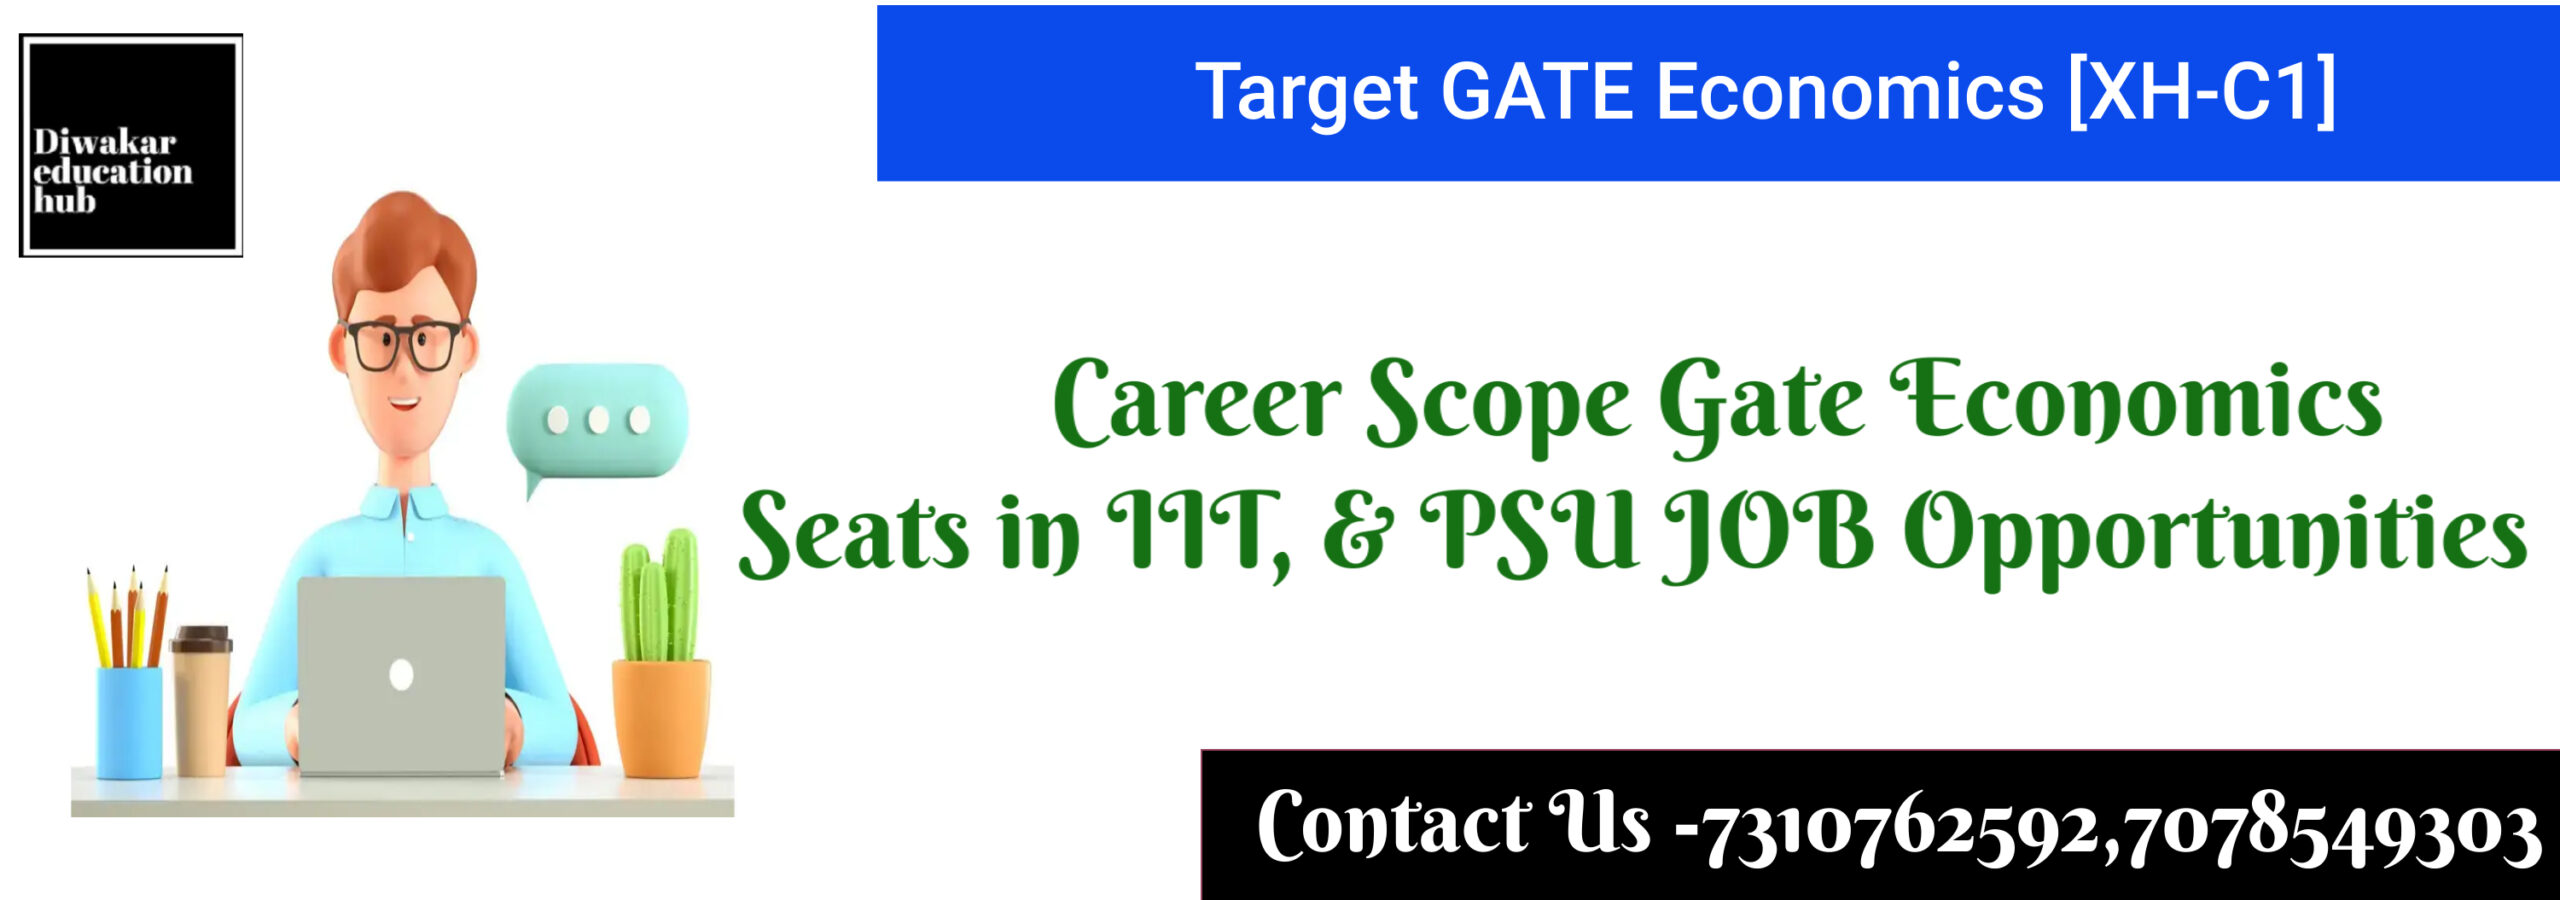 GATE Economics Career Scope